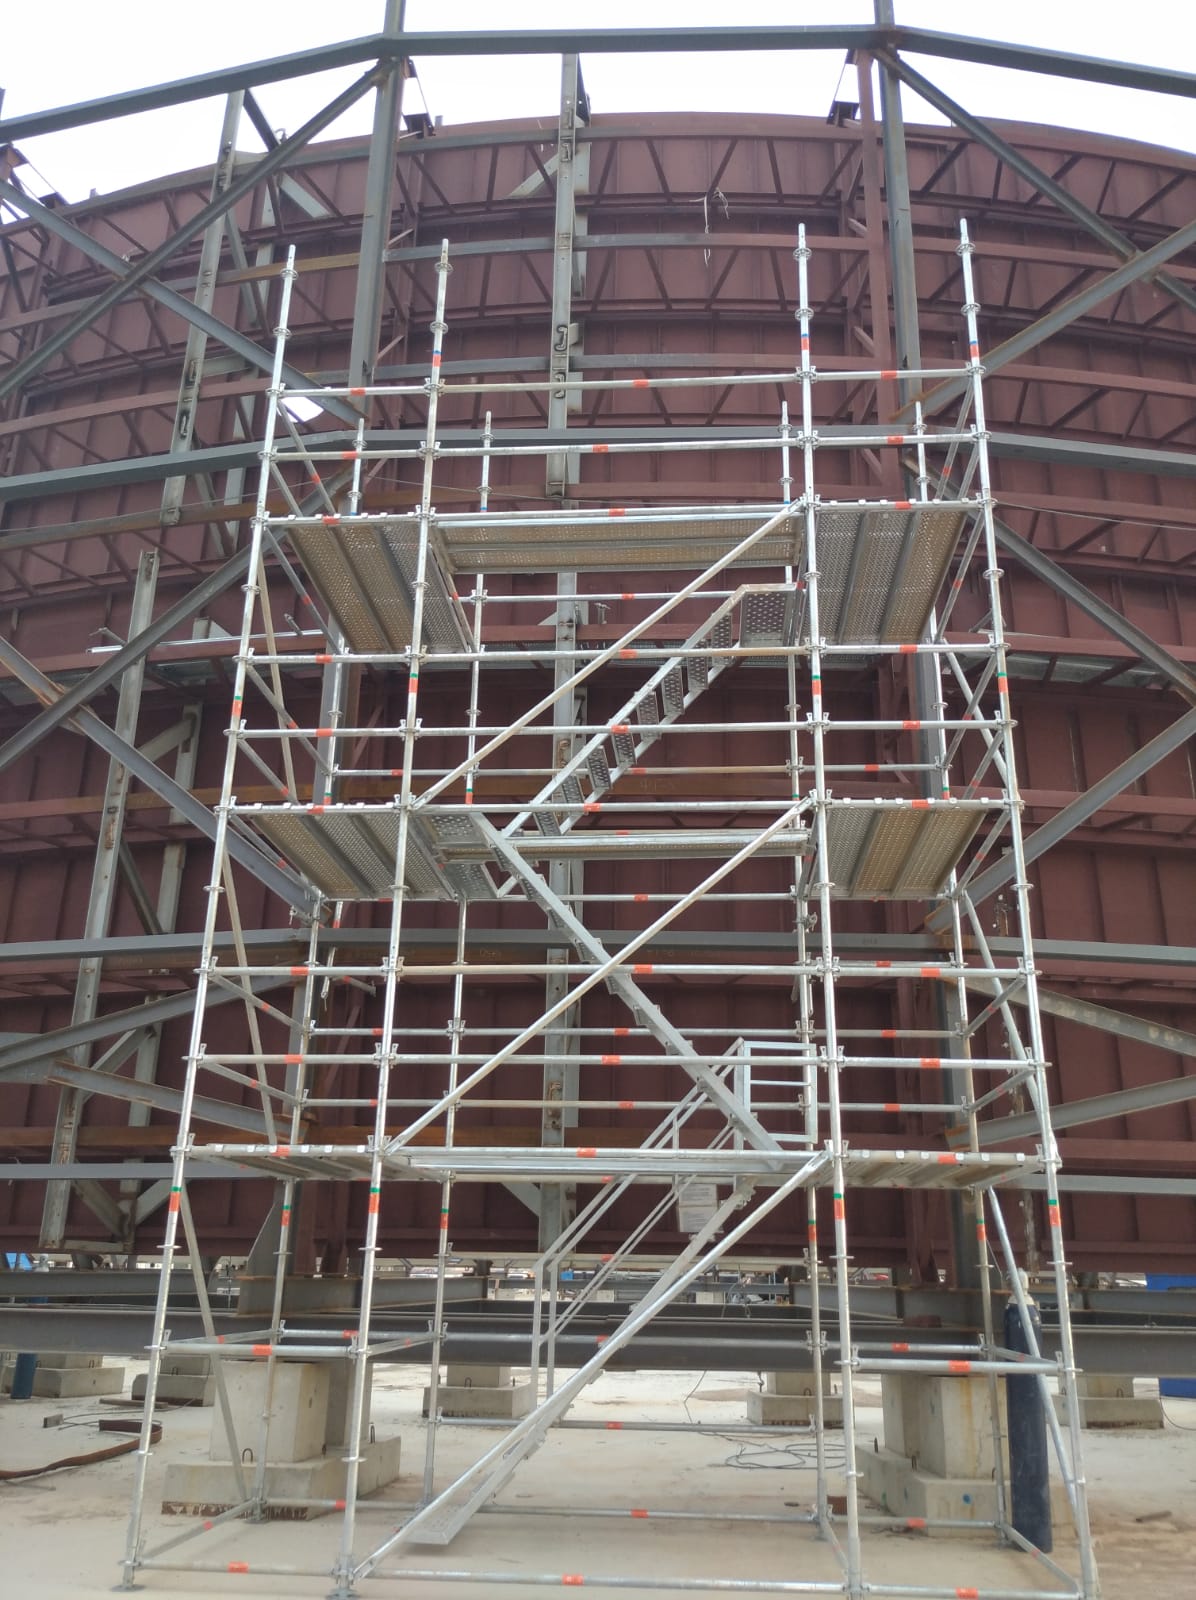 yagmur scaffolding stair tower 02 - STAIR TOWER